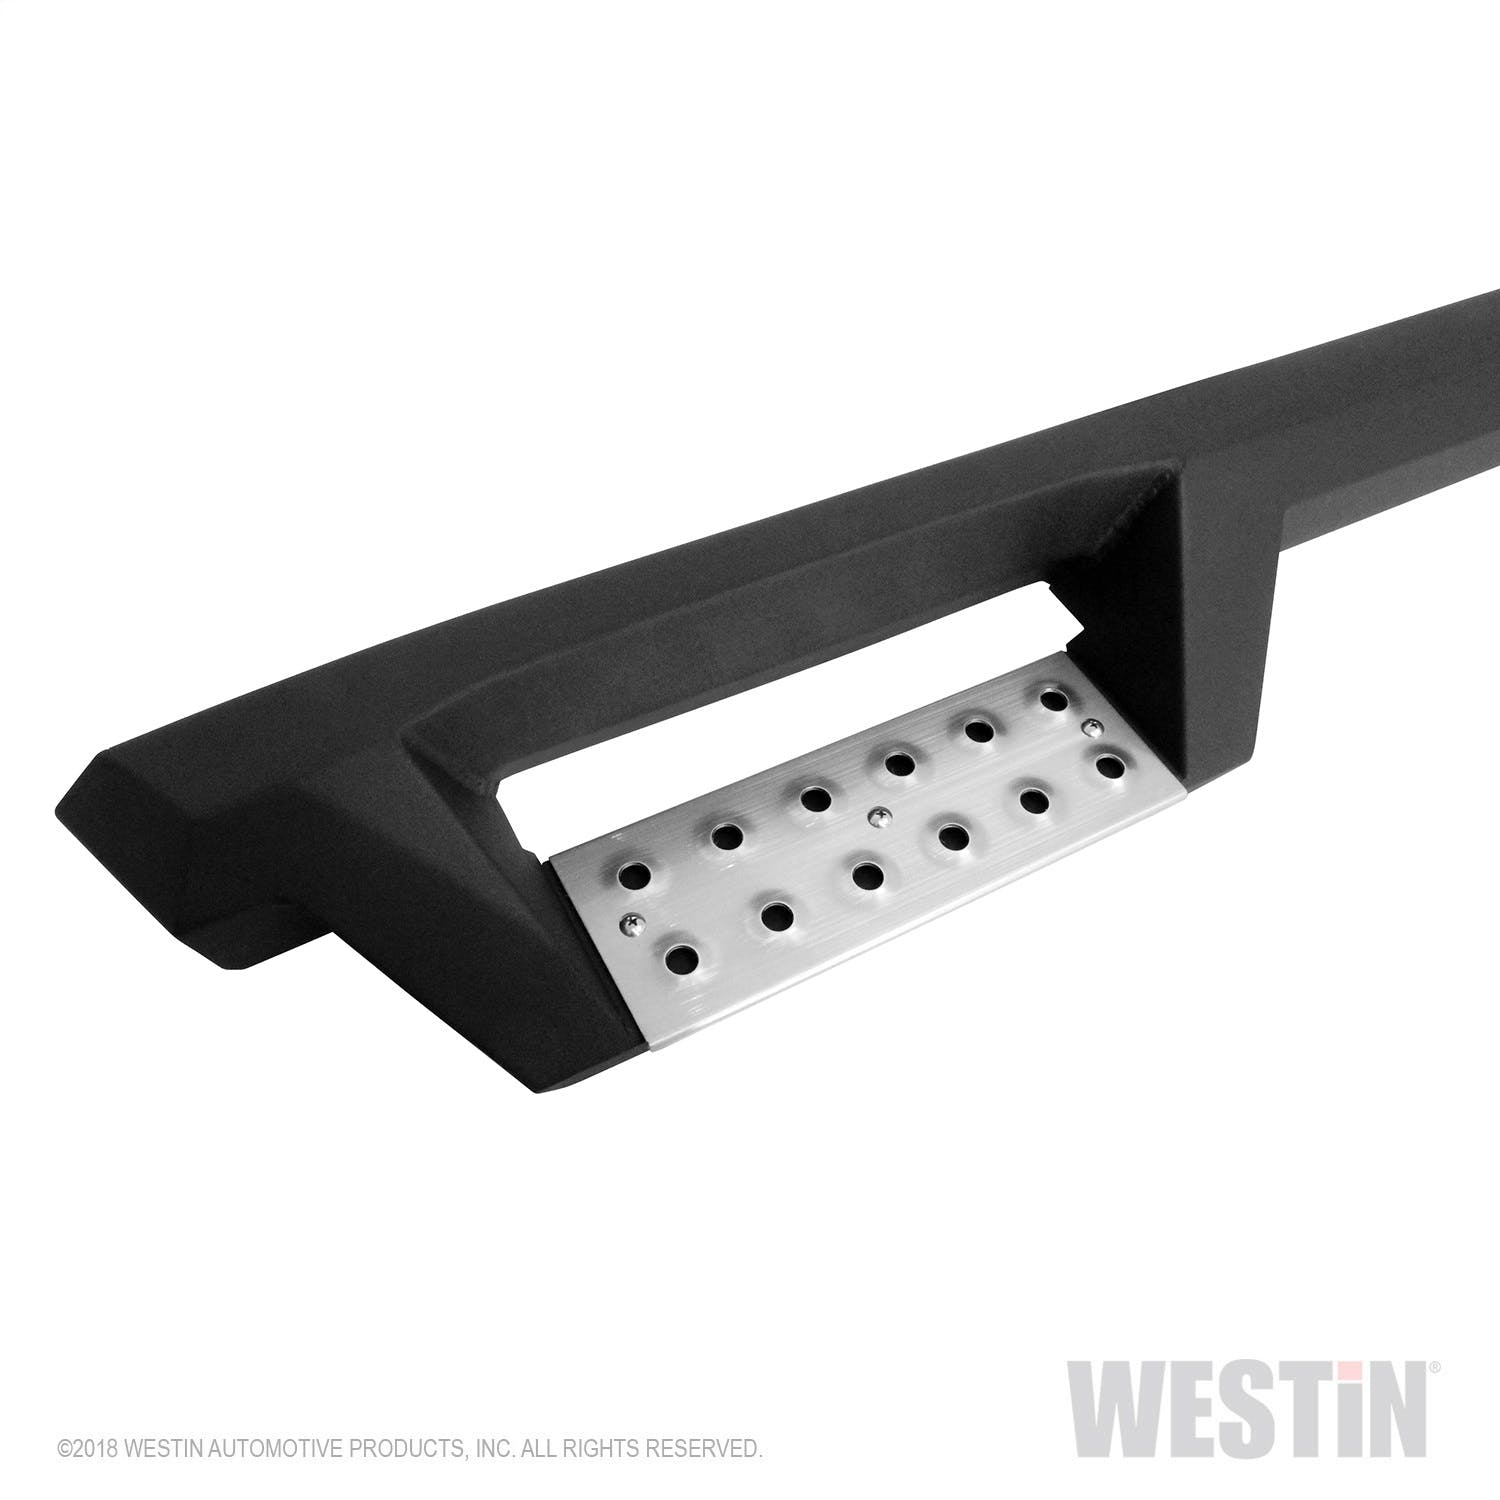 Westin Automotive 56-5343252 HDX Stainless Drop Wheel-to-Wheel Nerf Step Bars Textured Black